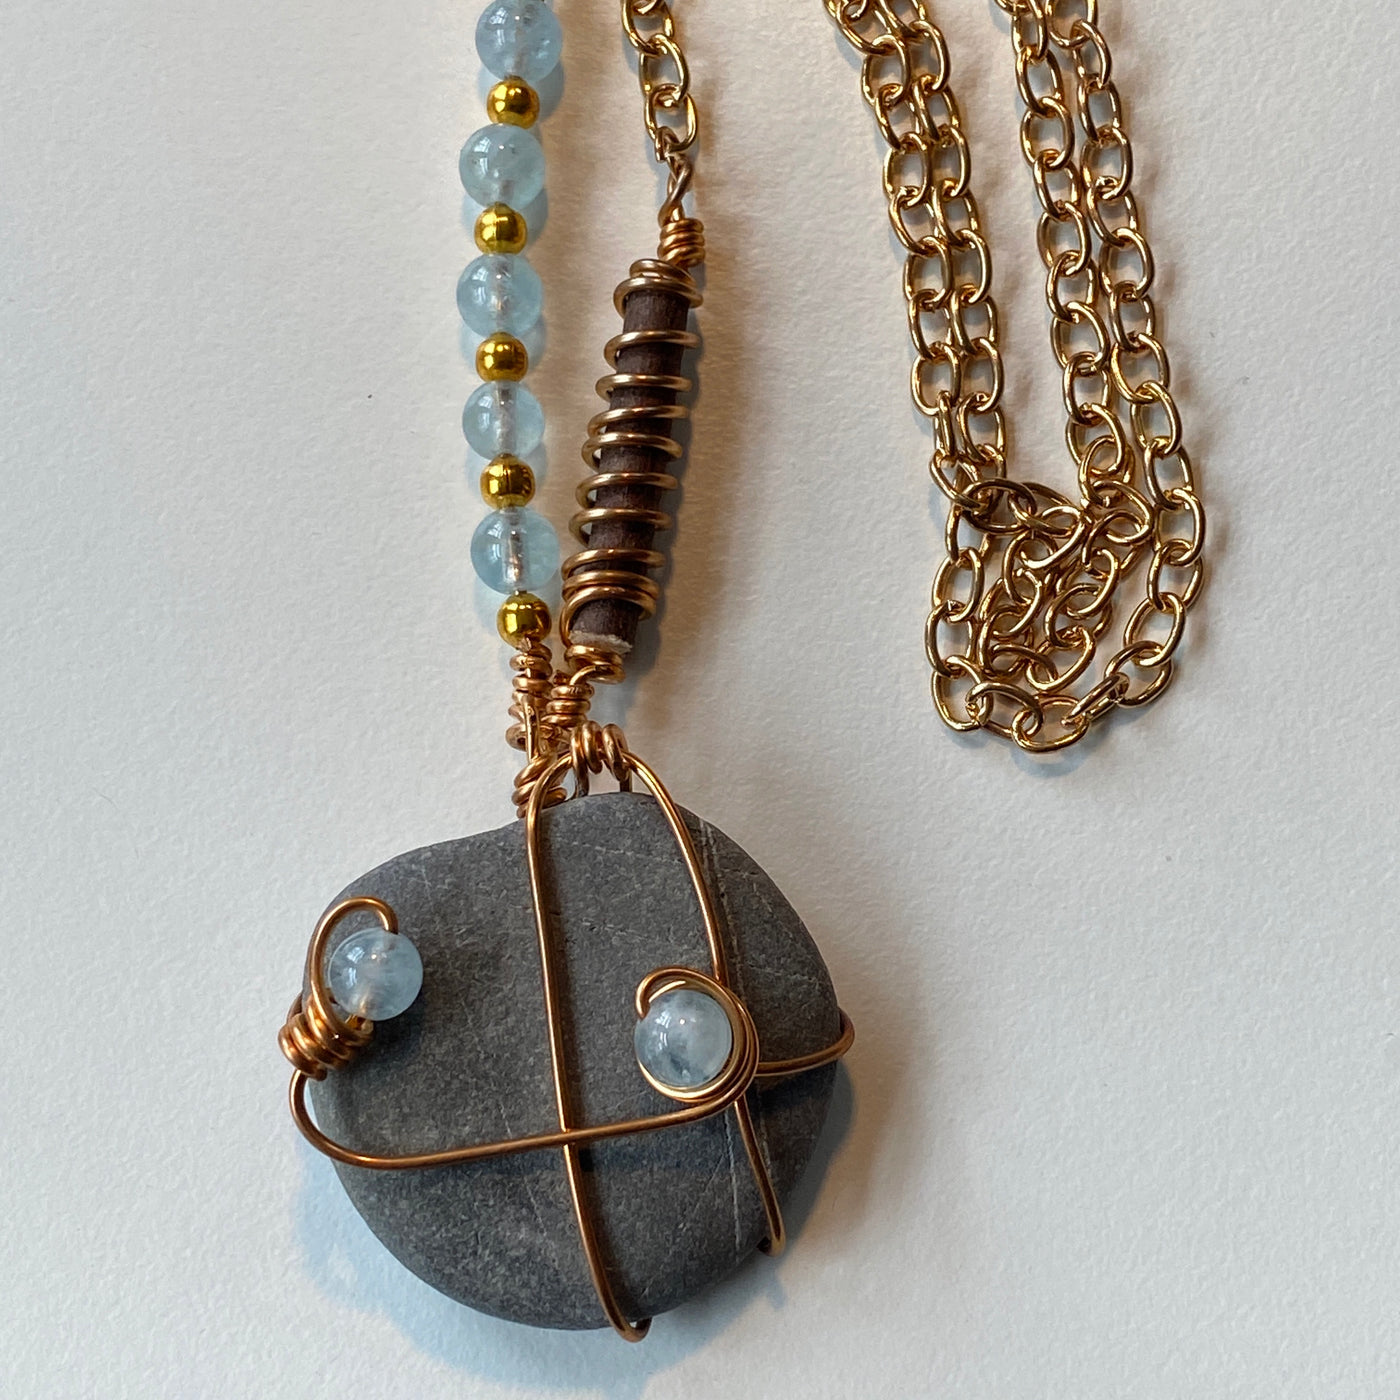 Grey natural stone, aquamarine, wood and wire pendant.